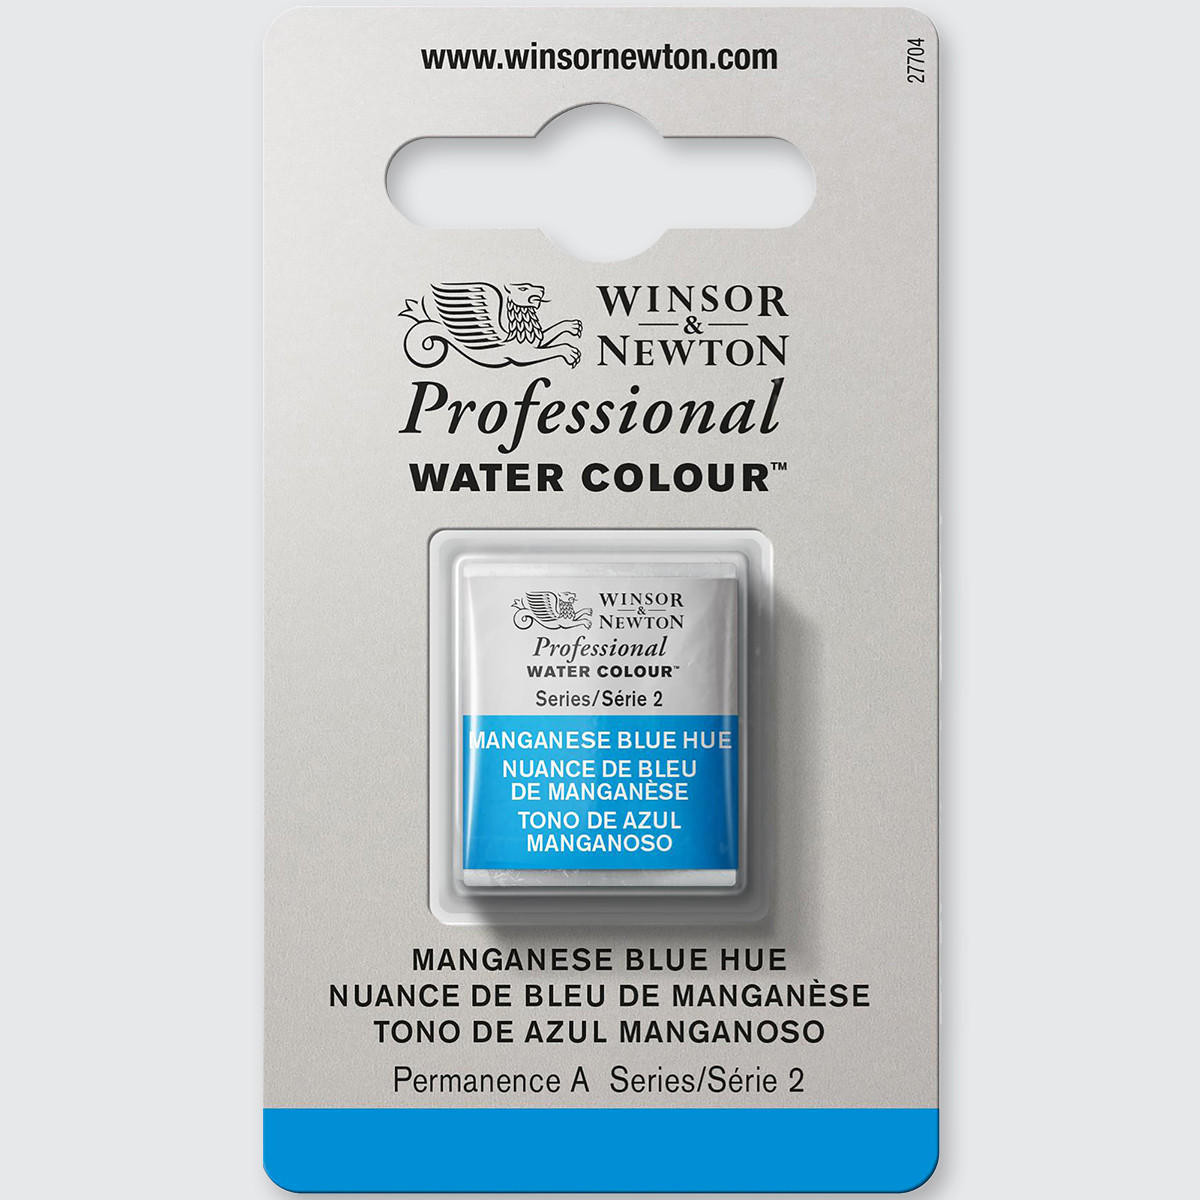 Winsor & Newton Professional Water Colour Half Pan Manganese Blue Hue